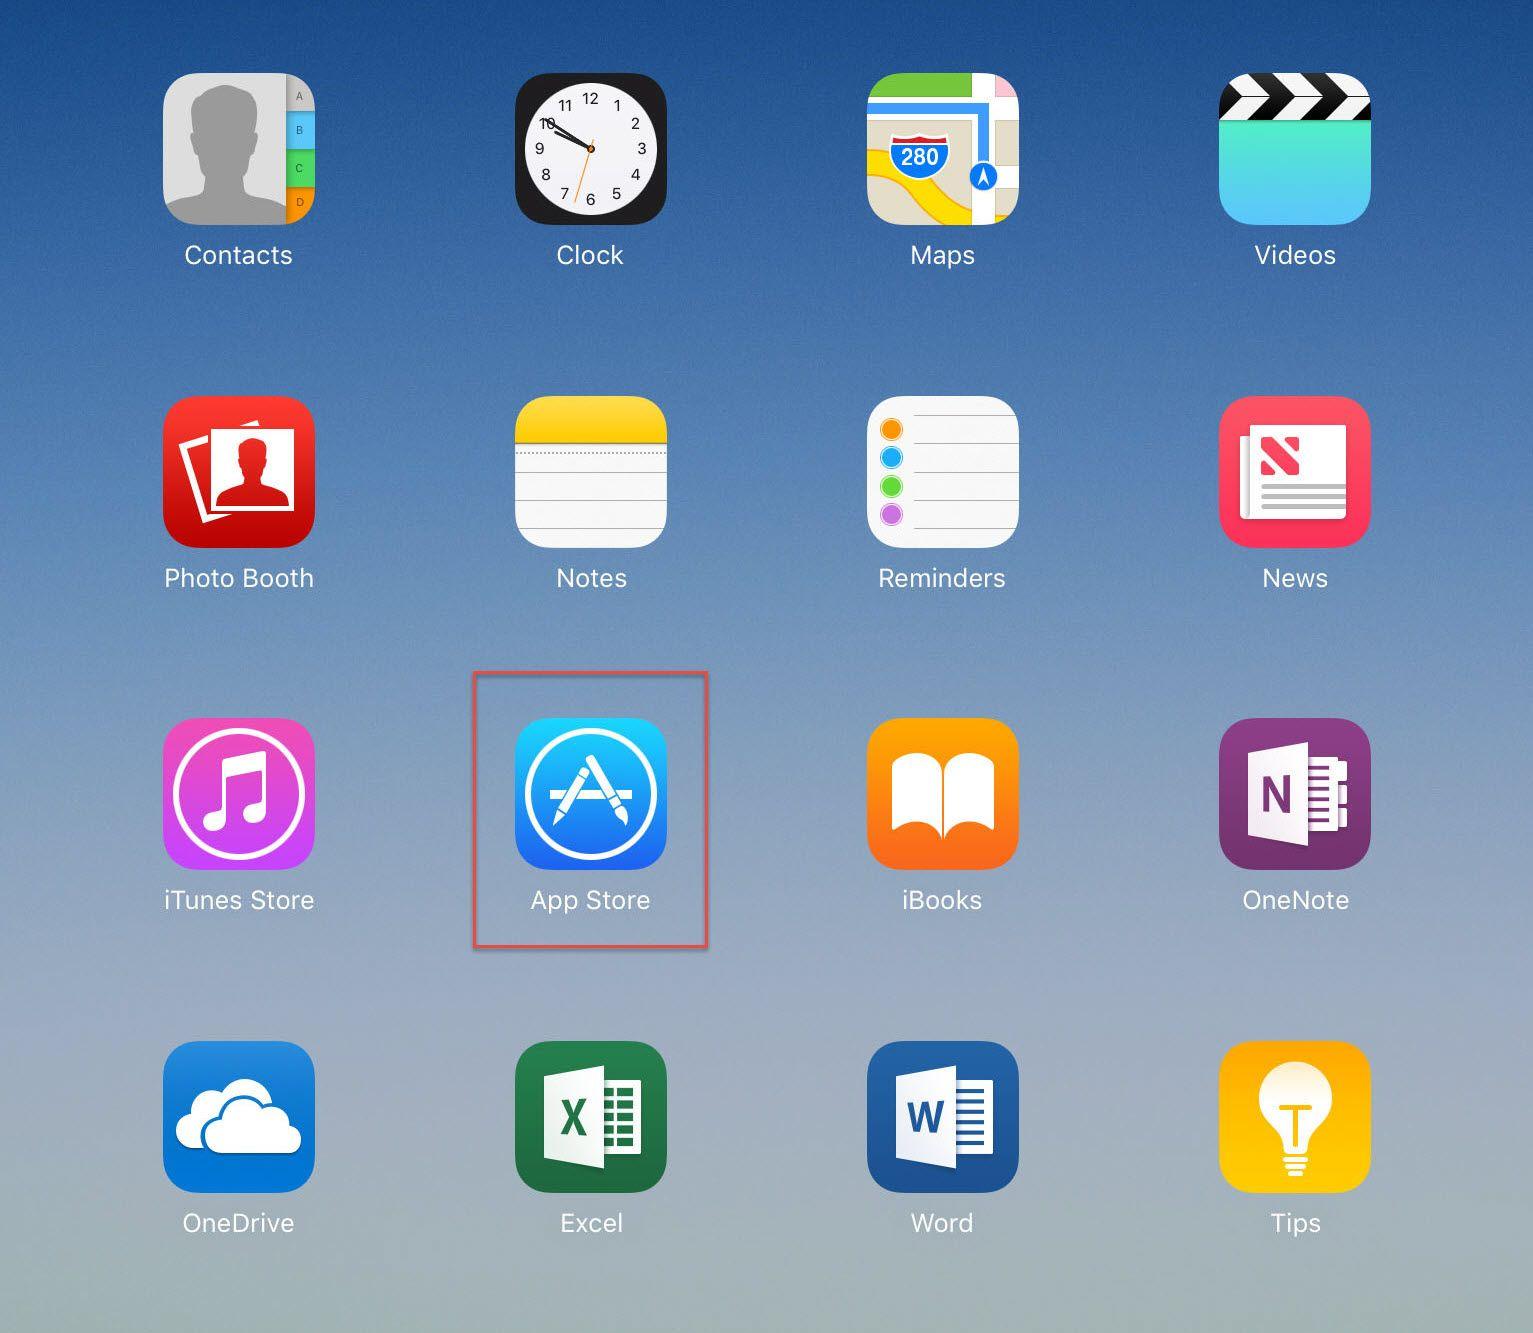 iPad App Store Logo - Downloading Blackboard Mobile Learn App on iPad or iPhone - Ferris ...